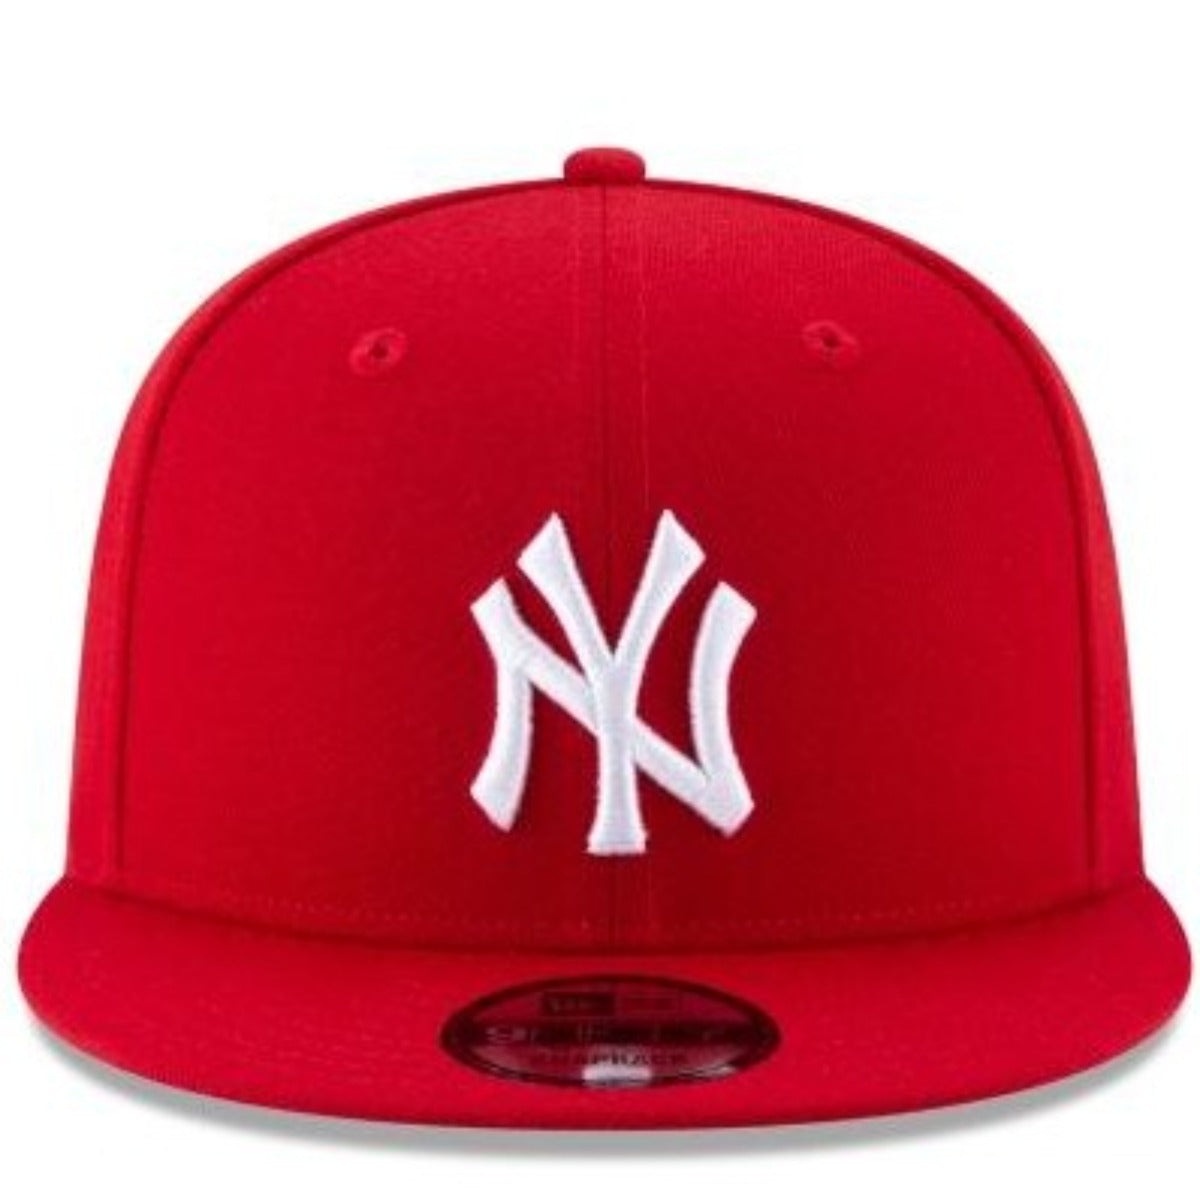 New York Yankees New Era Basic 9FIFTY Snapback Hat-Red nvsoccer.com the coliseum